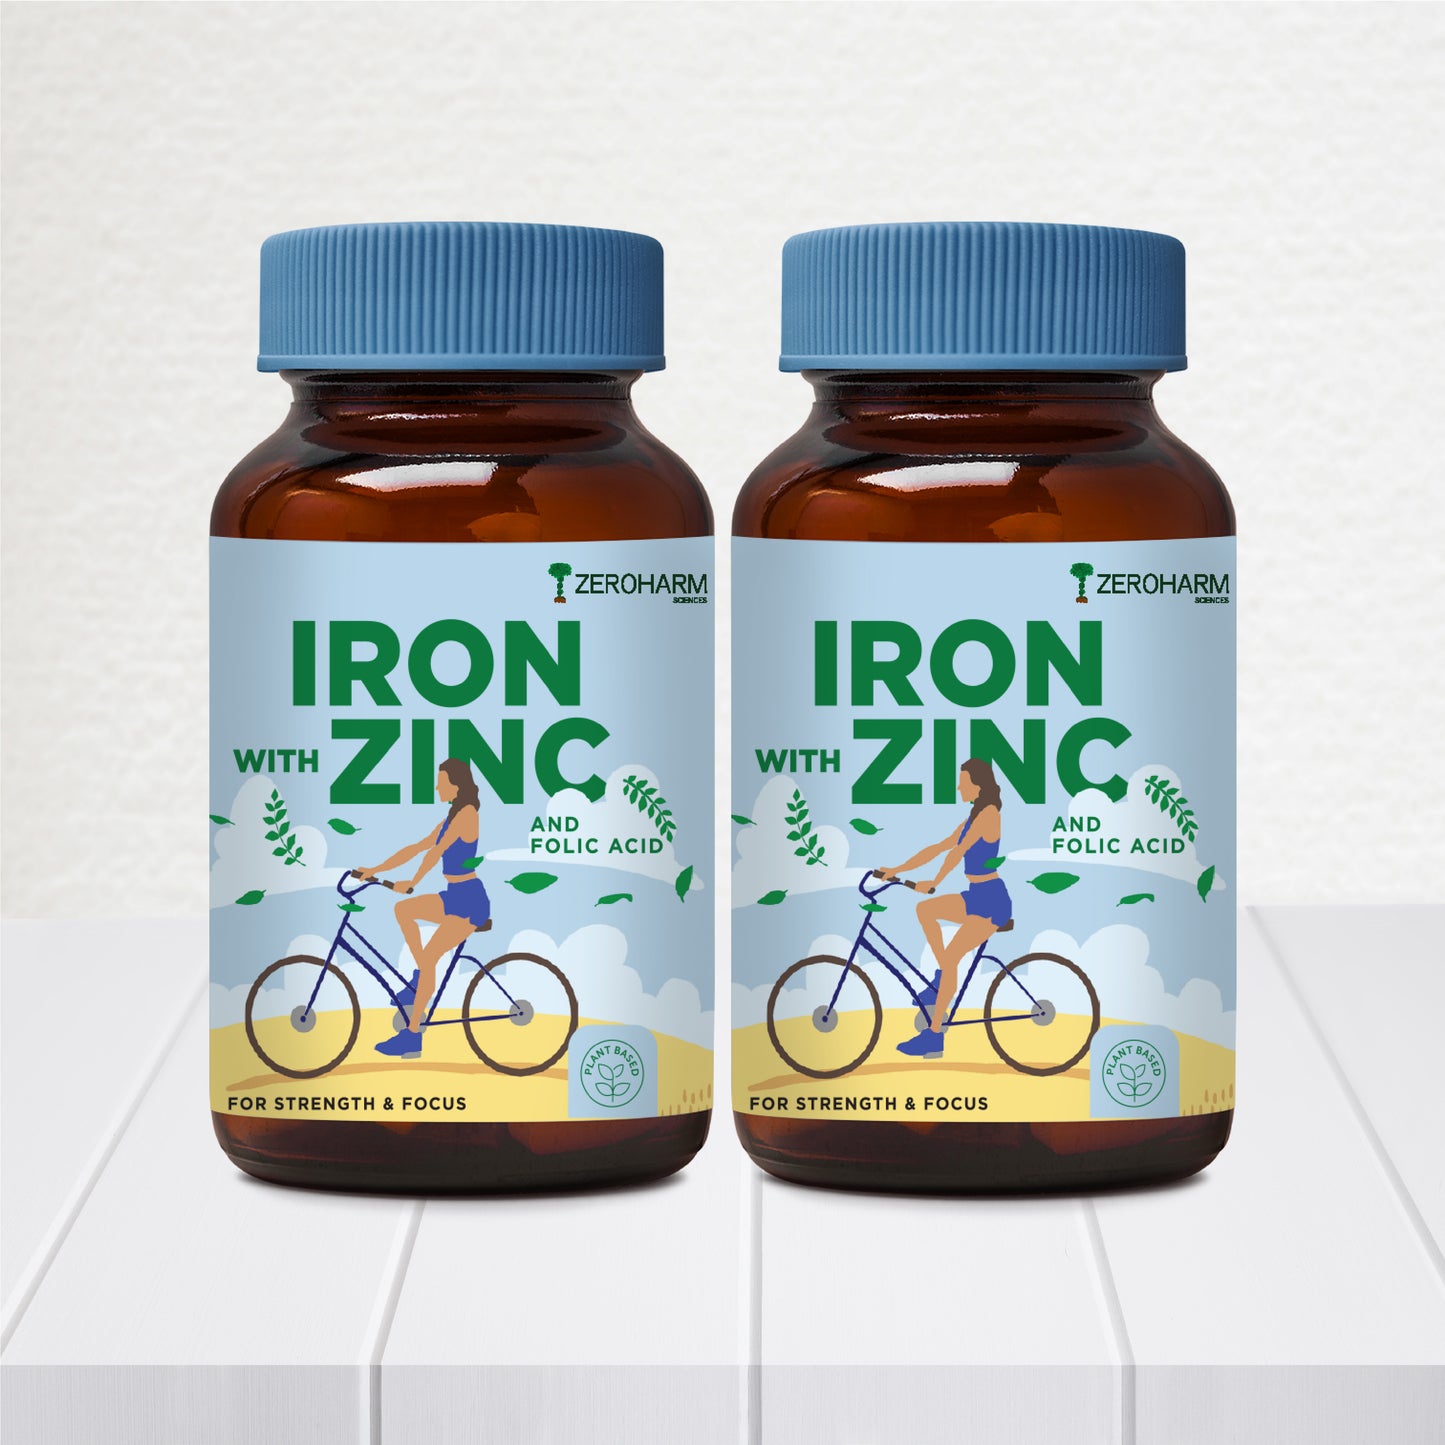 Iron Zinc Folic Acid Vitamin B12 Tablets